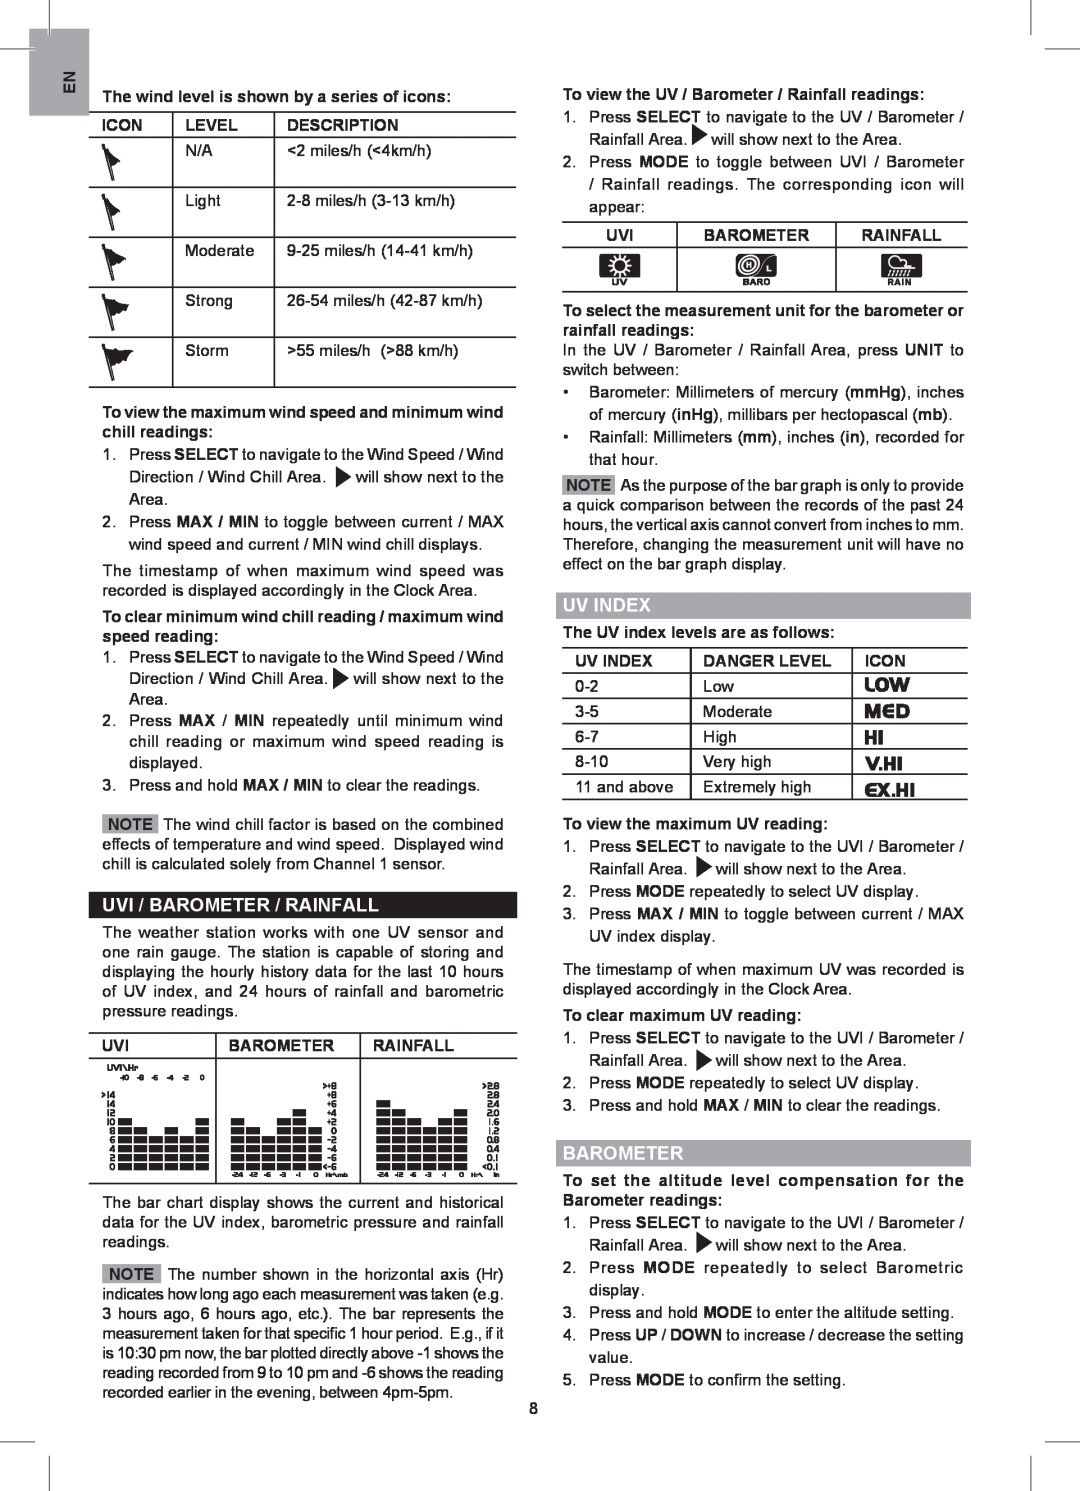 Oregon Scientific WMR88 user manual Uvi / Barometer / Rainfall, Uv Index 